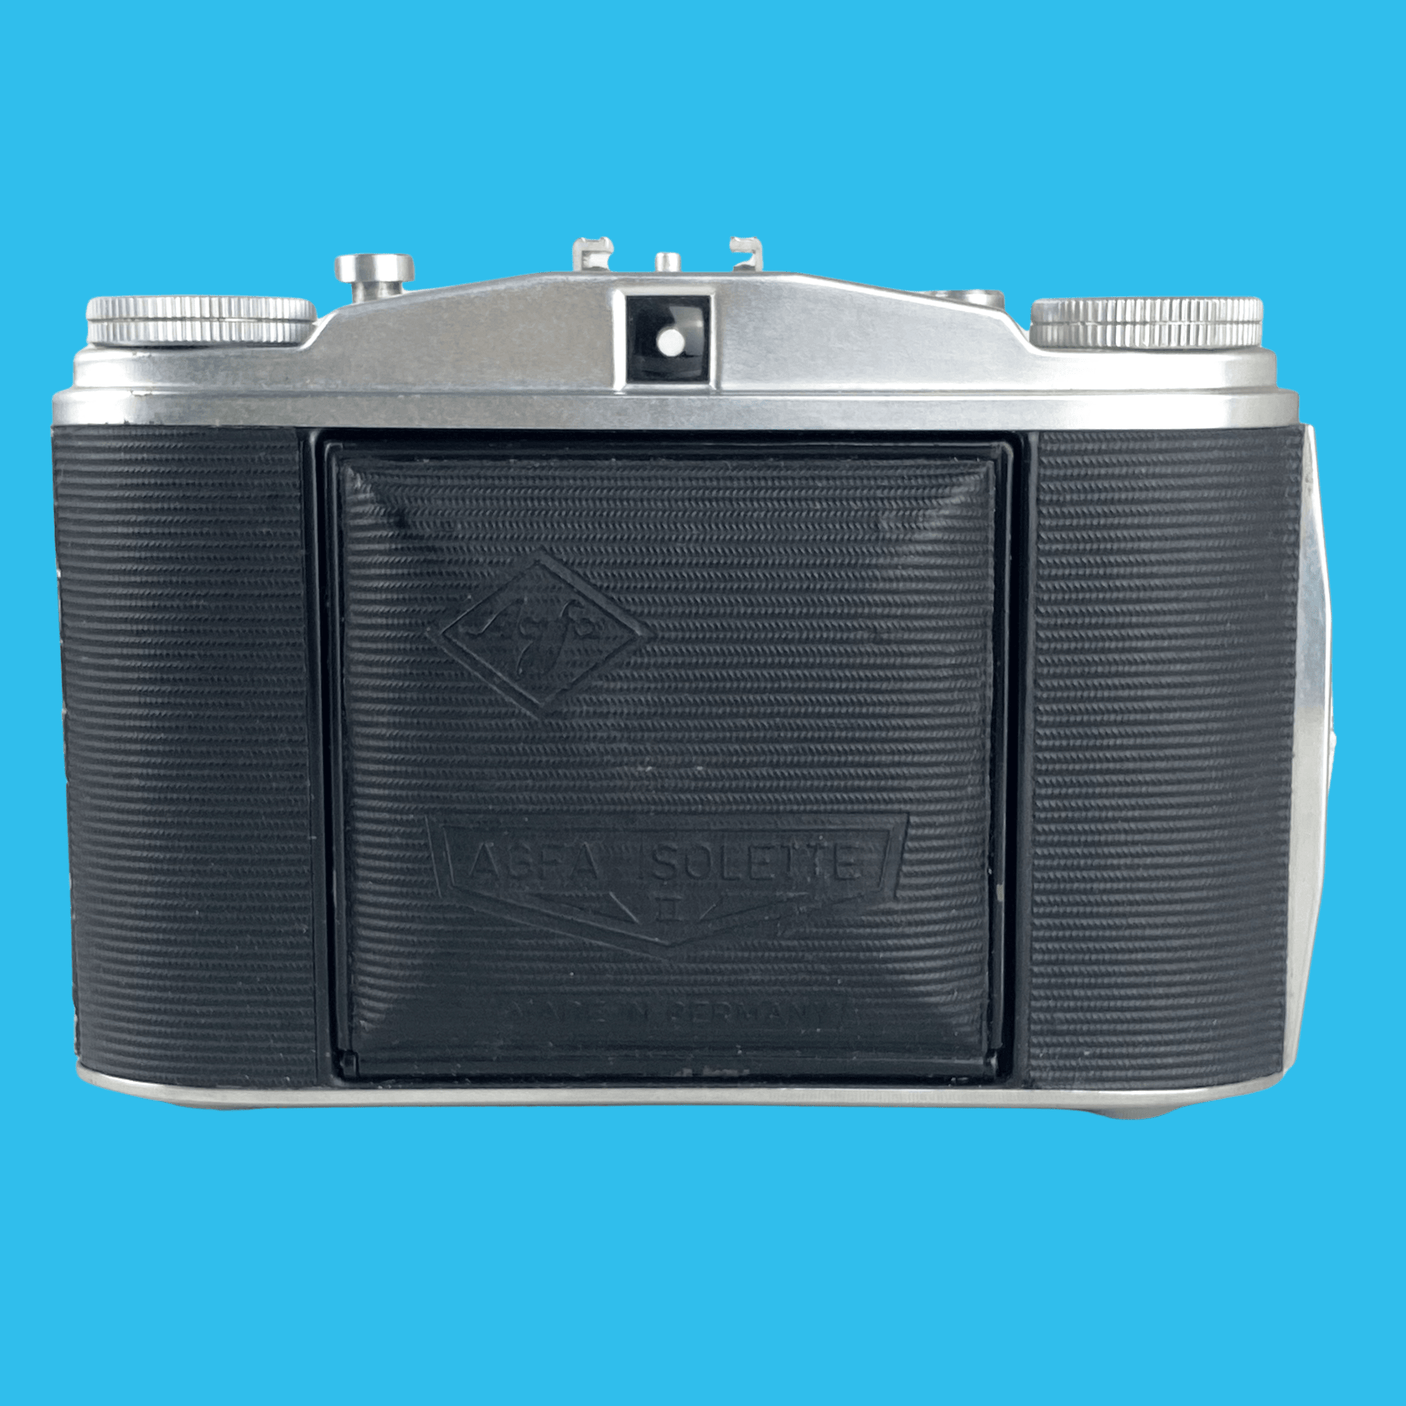 AFGA Isolette II 6X6 Medium Format Folding Film Camera With 75mm F3.5 Lens.